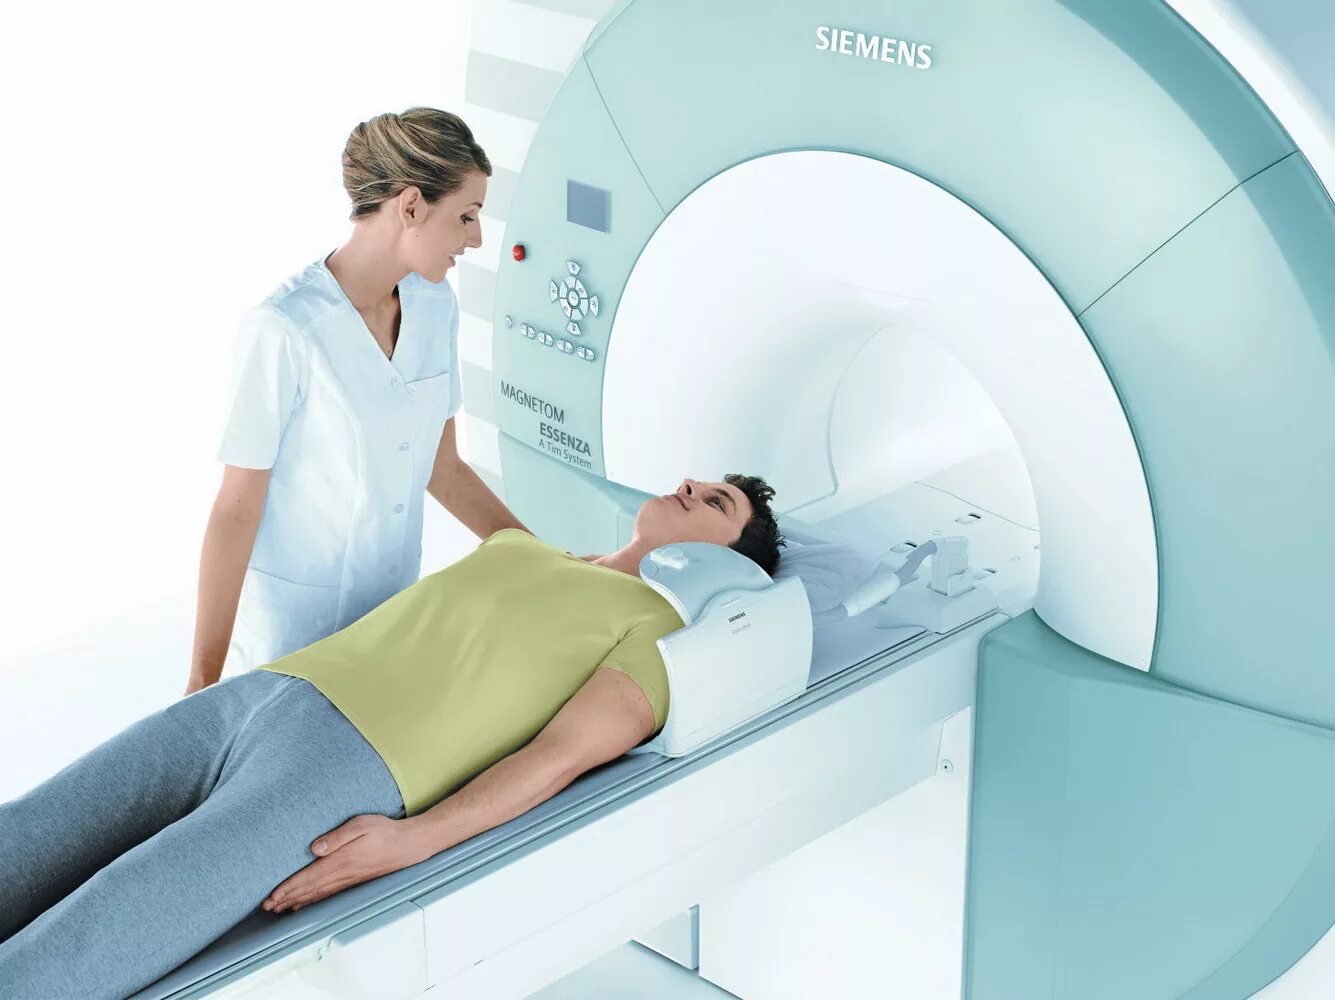 Mrt. Siemens MAGNETOM Essenza 1.5t. Магнито-резонансная томография. Магнитно-резонансная томограмма (мрт). Магнито-резонансный томограф.